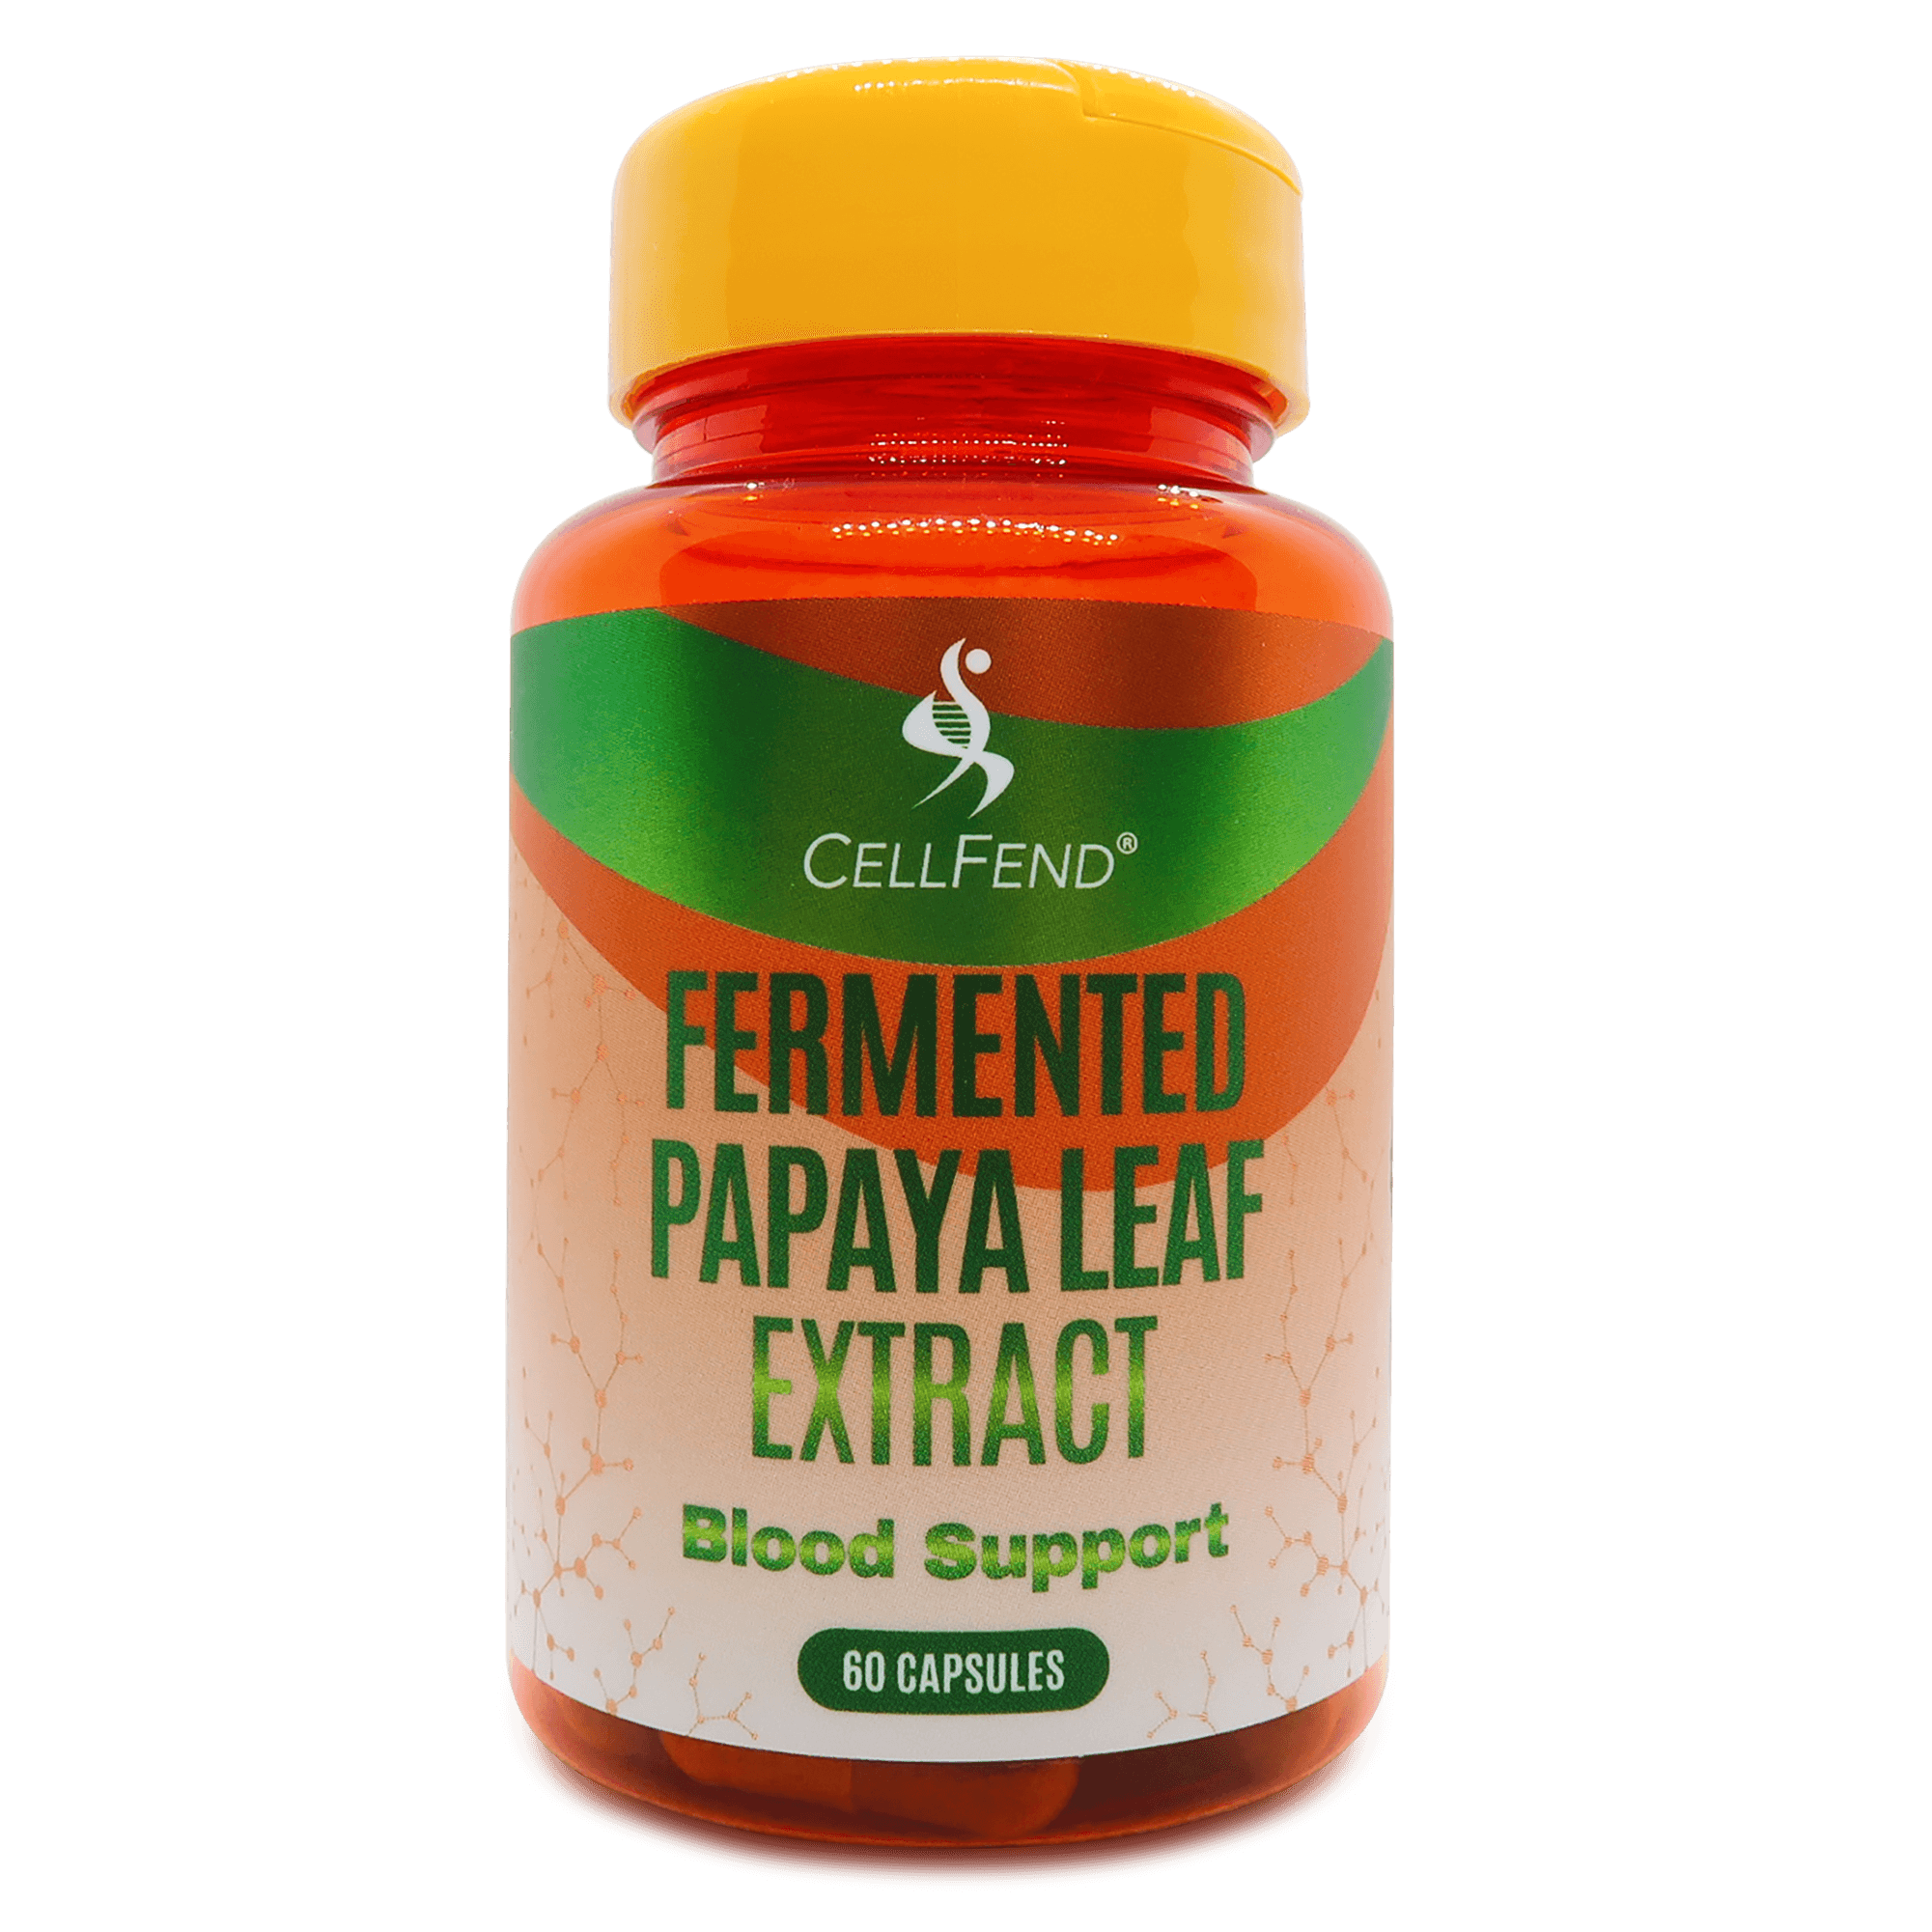 Fermented Papaya Leaf Extract